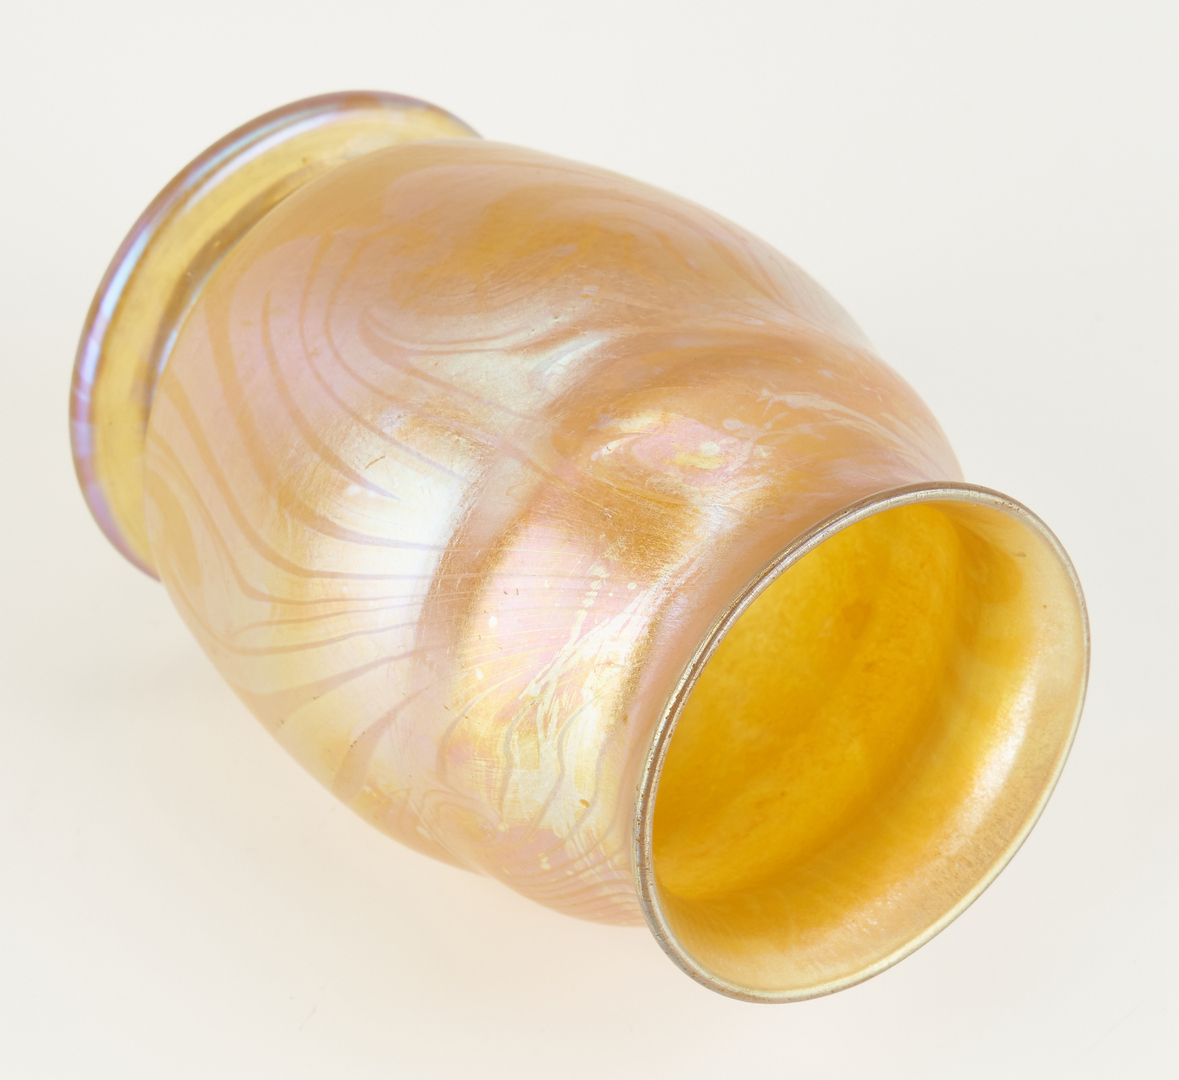 Lot 872: Signed LCT Tiffany Favrile Art Glass Vase